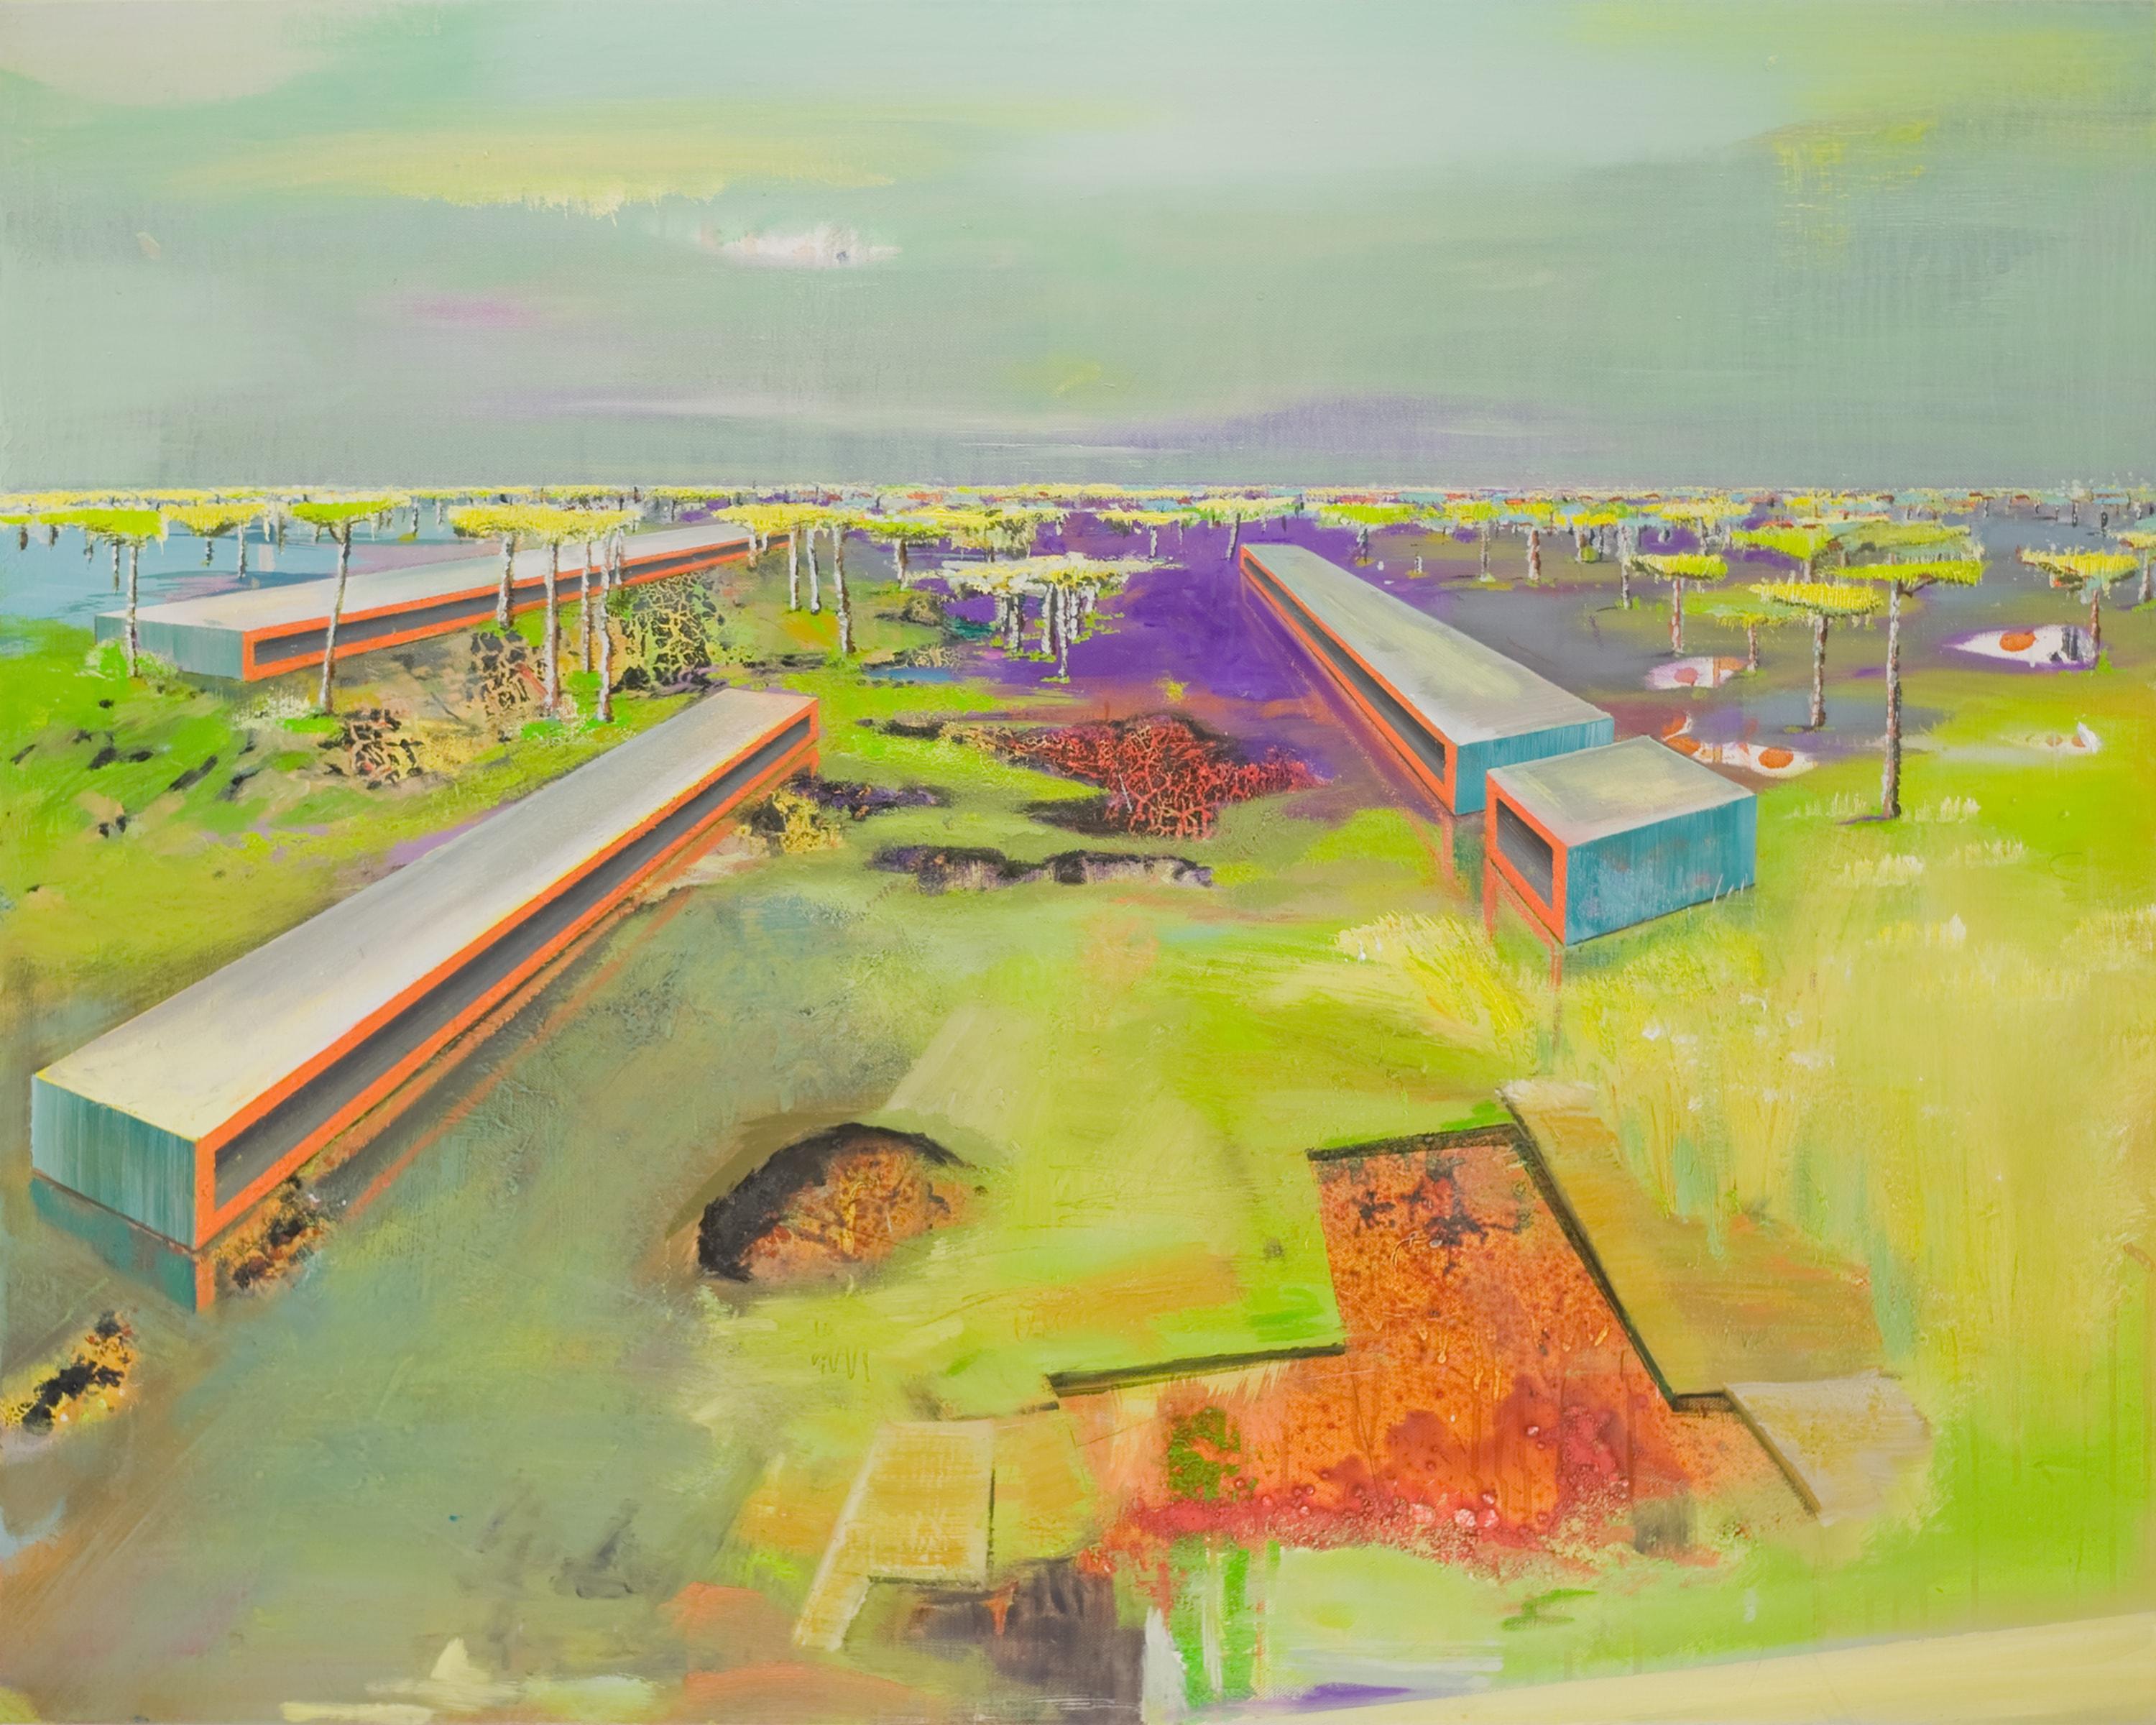 Grund by Emanuel Schulze - Architecture and landscape painting, vivid colours